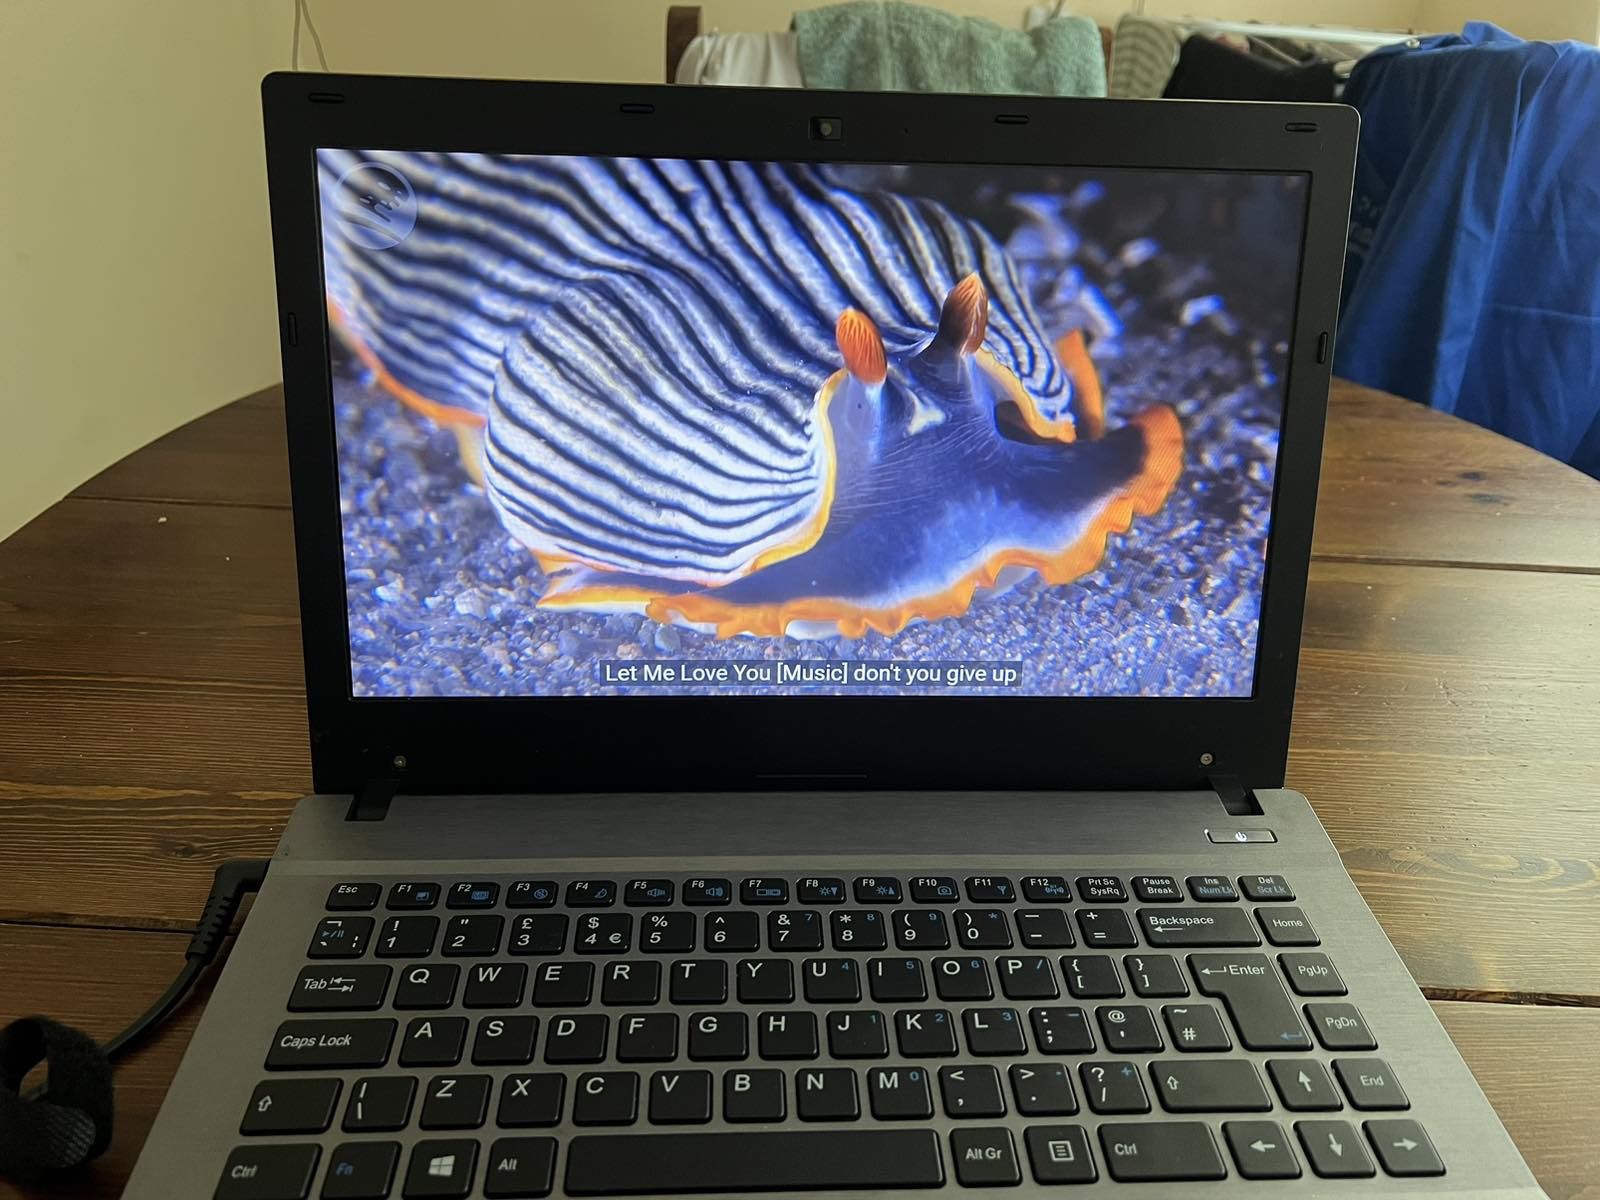 Лаптоп Clevo u540, двуядрен 2.4, 4гб рам, 500 гб.
2,4 двуядрен ,4 гиг